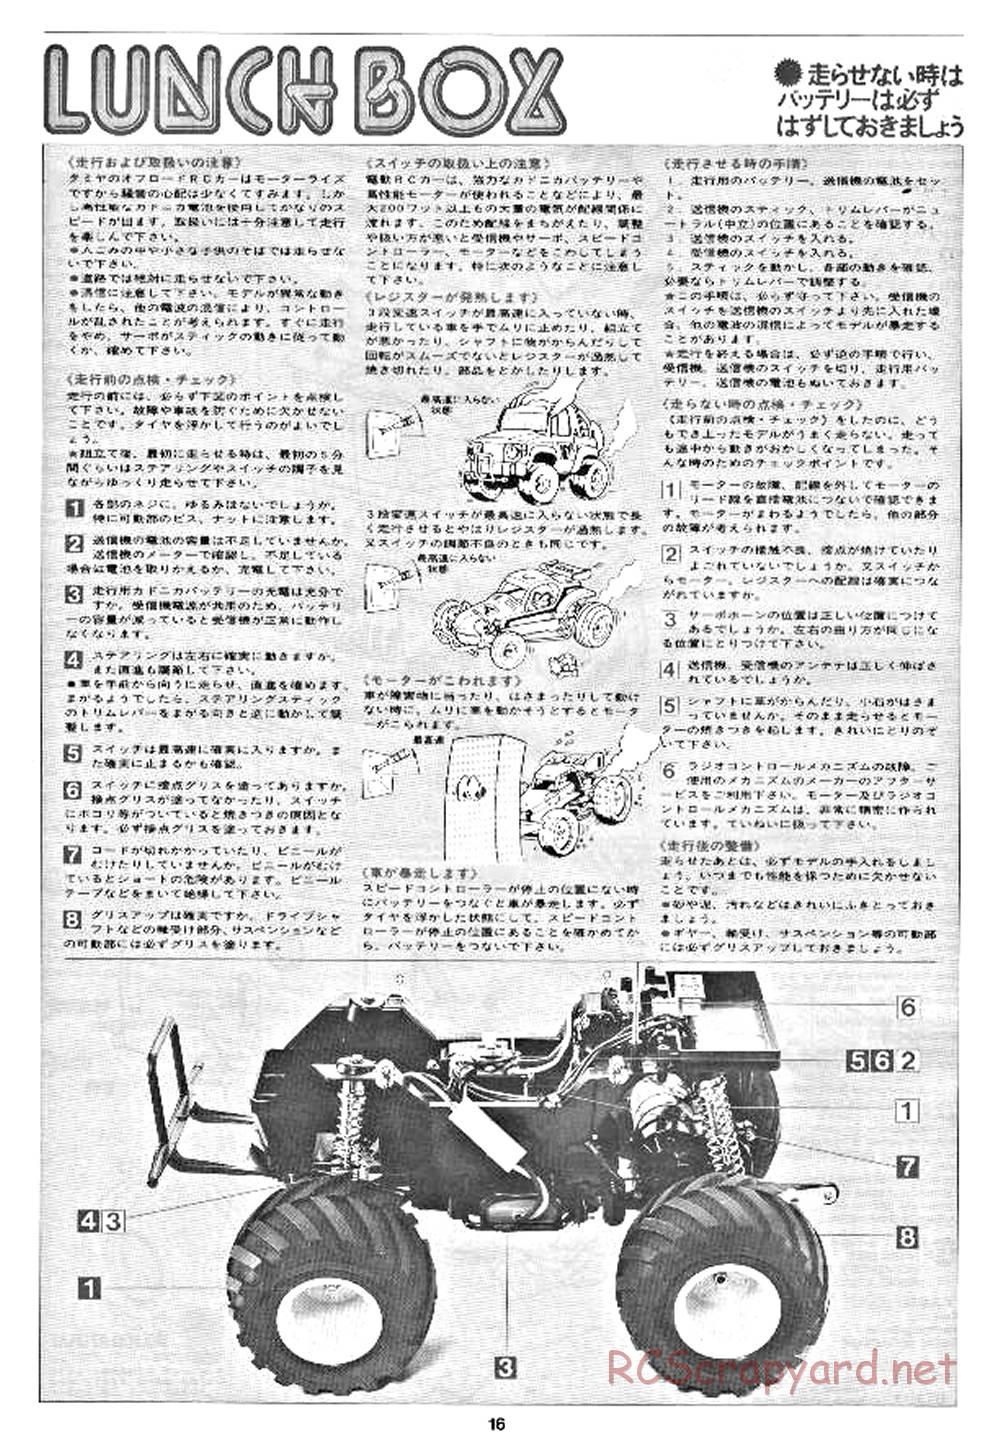 Tamiya - Lunchbox - 58063 - Manual - Page 16